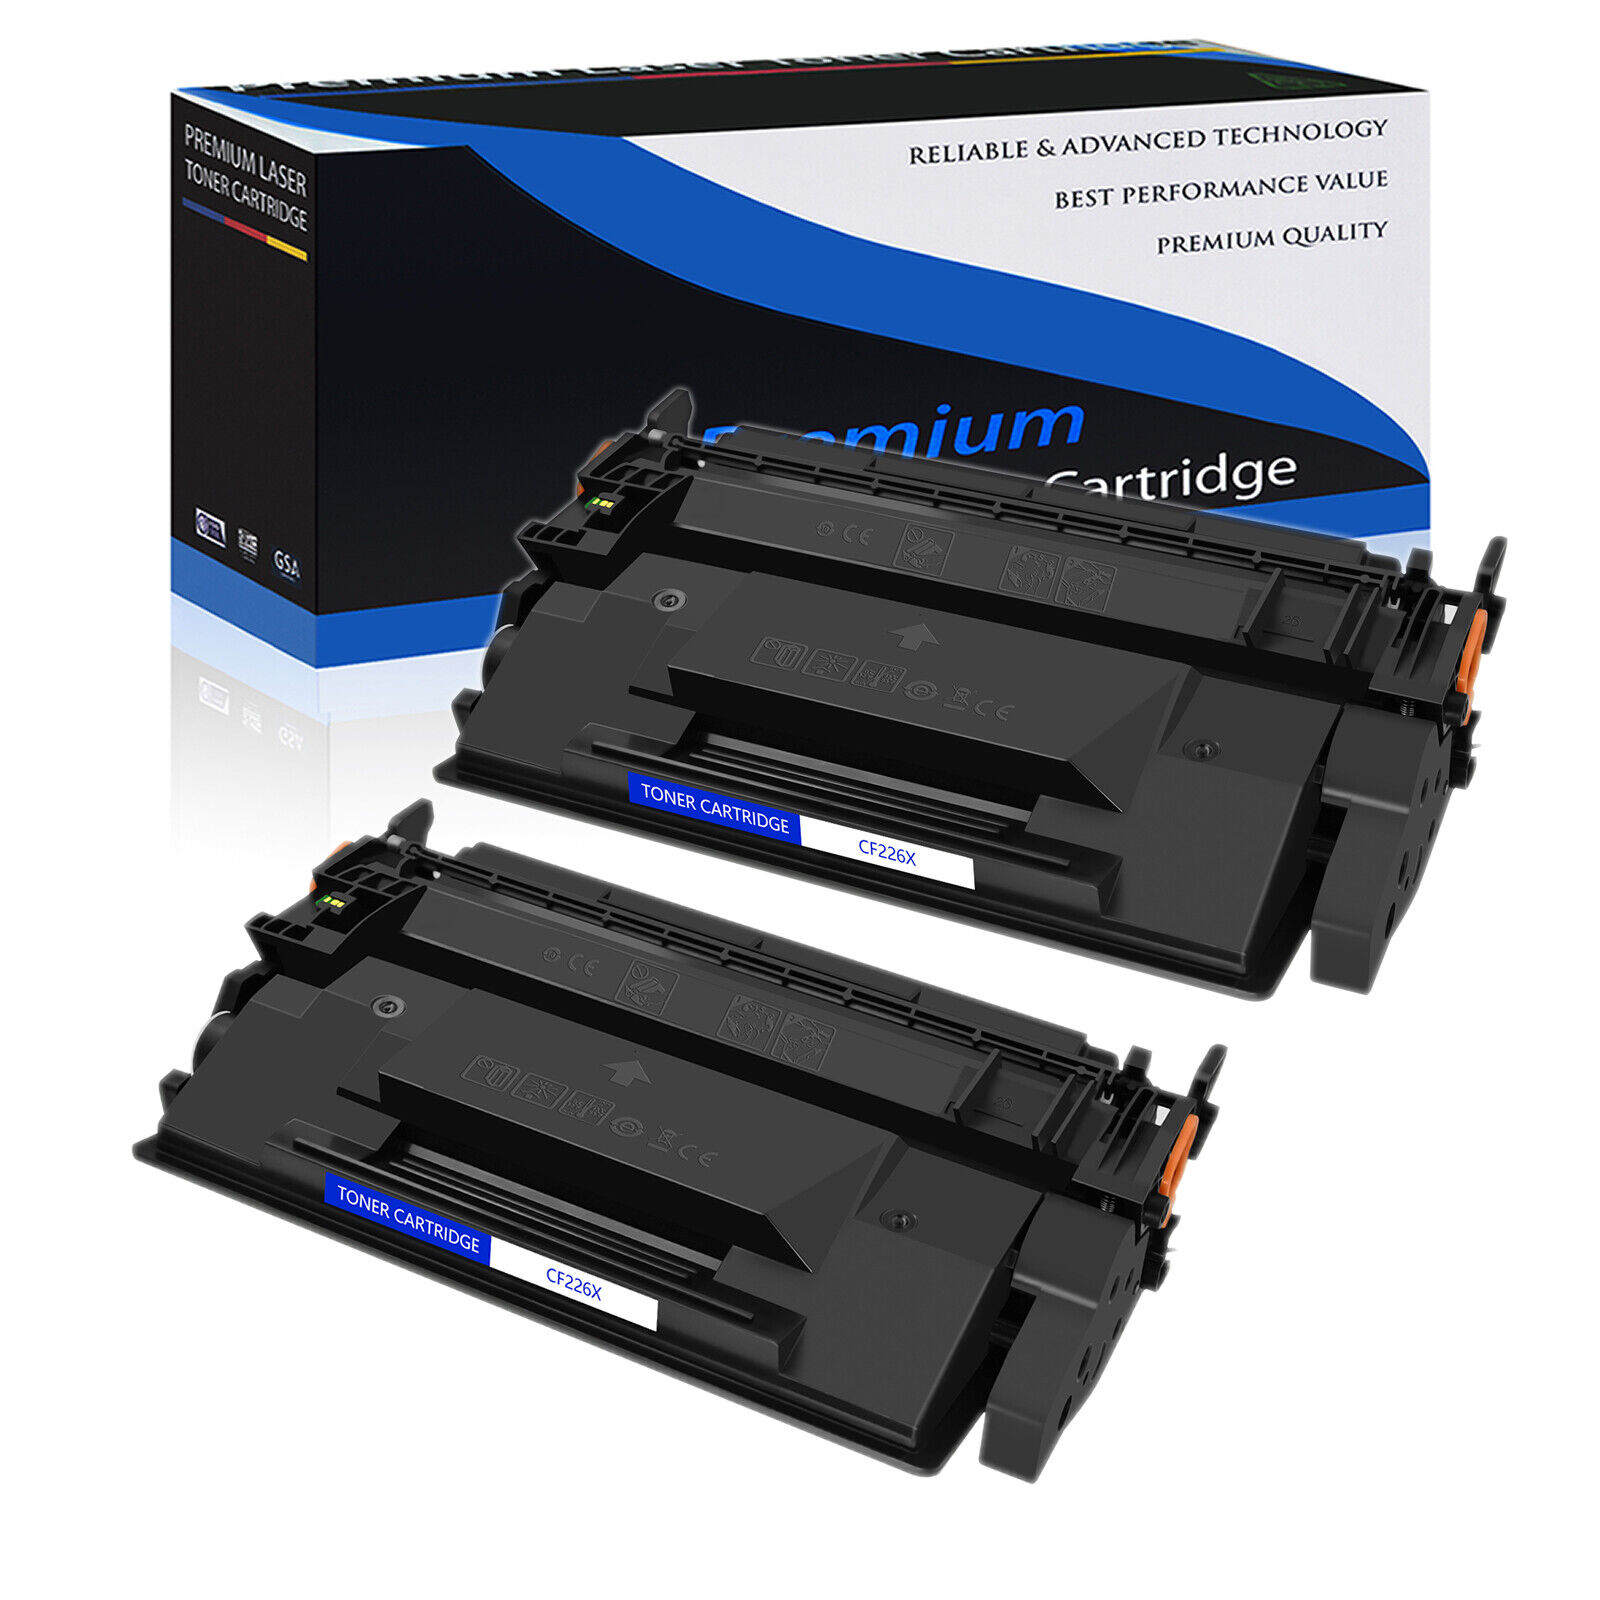 2 PACK CF226X 26X Toner Cartridge Compatible With HP LaserJet Pro M402dn Printer